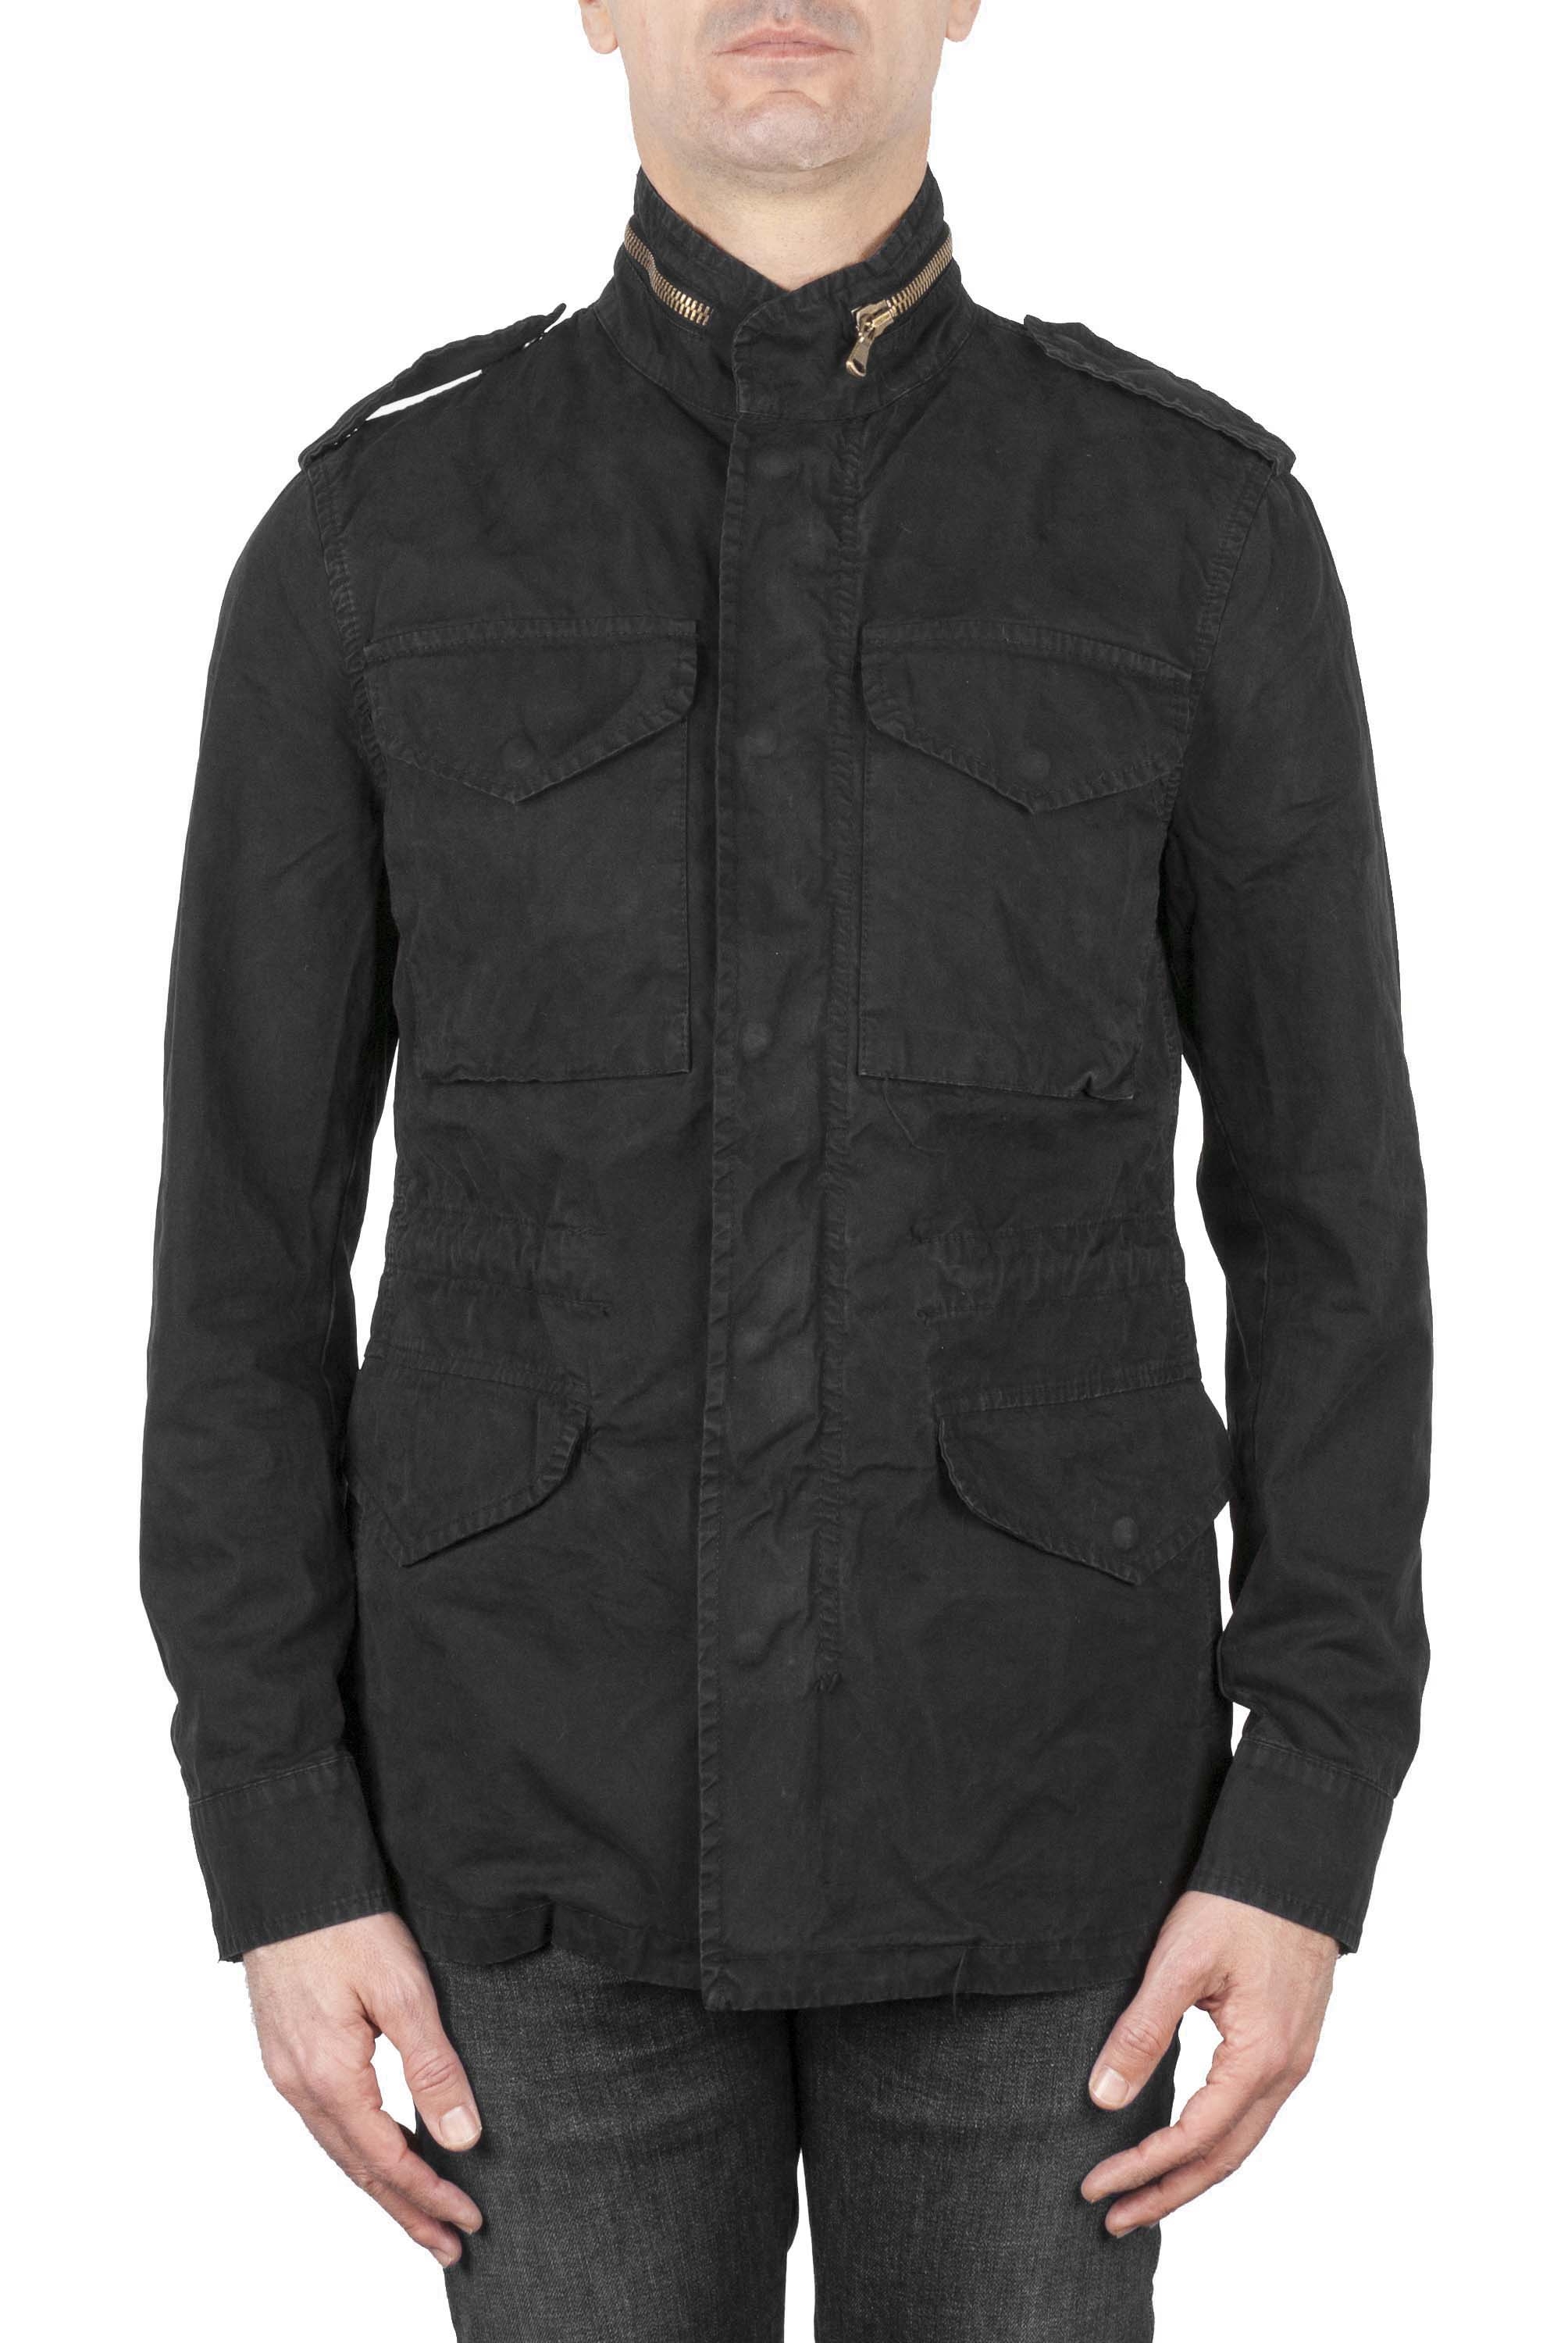 SBU 01568 Stone washed black cotton military field jacket 01